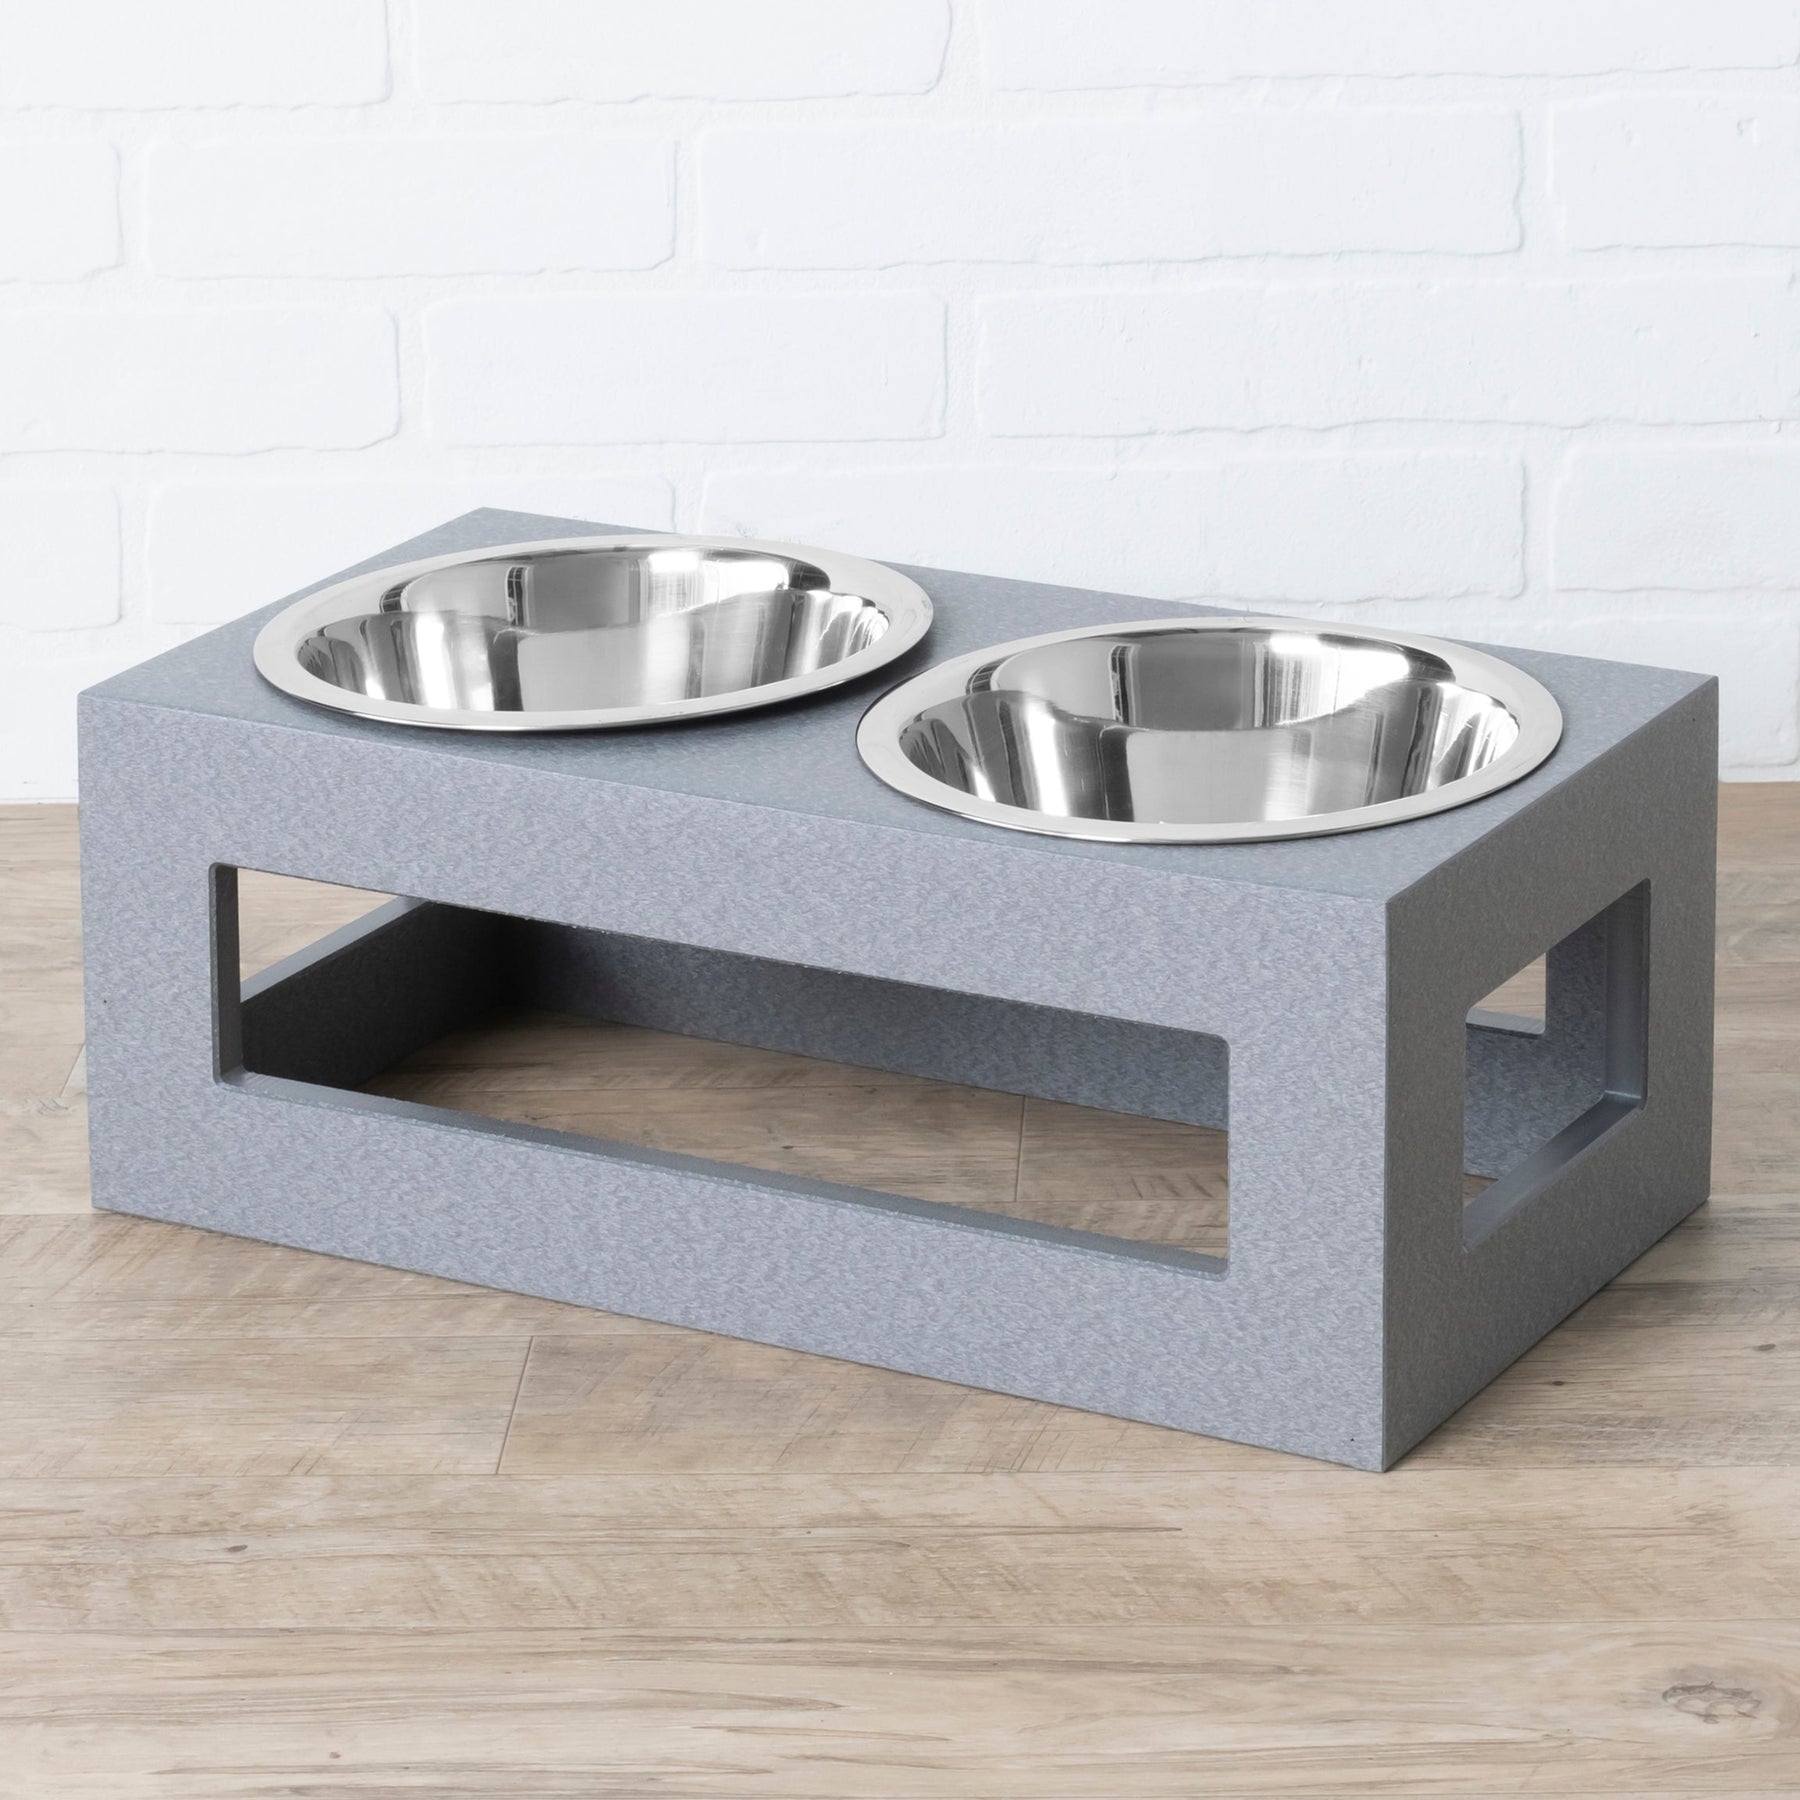 Modern Elevated Dog Bowl Stand, Small - Large Dog Feeding